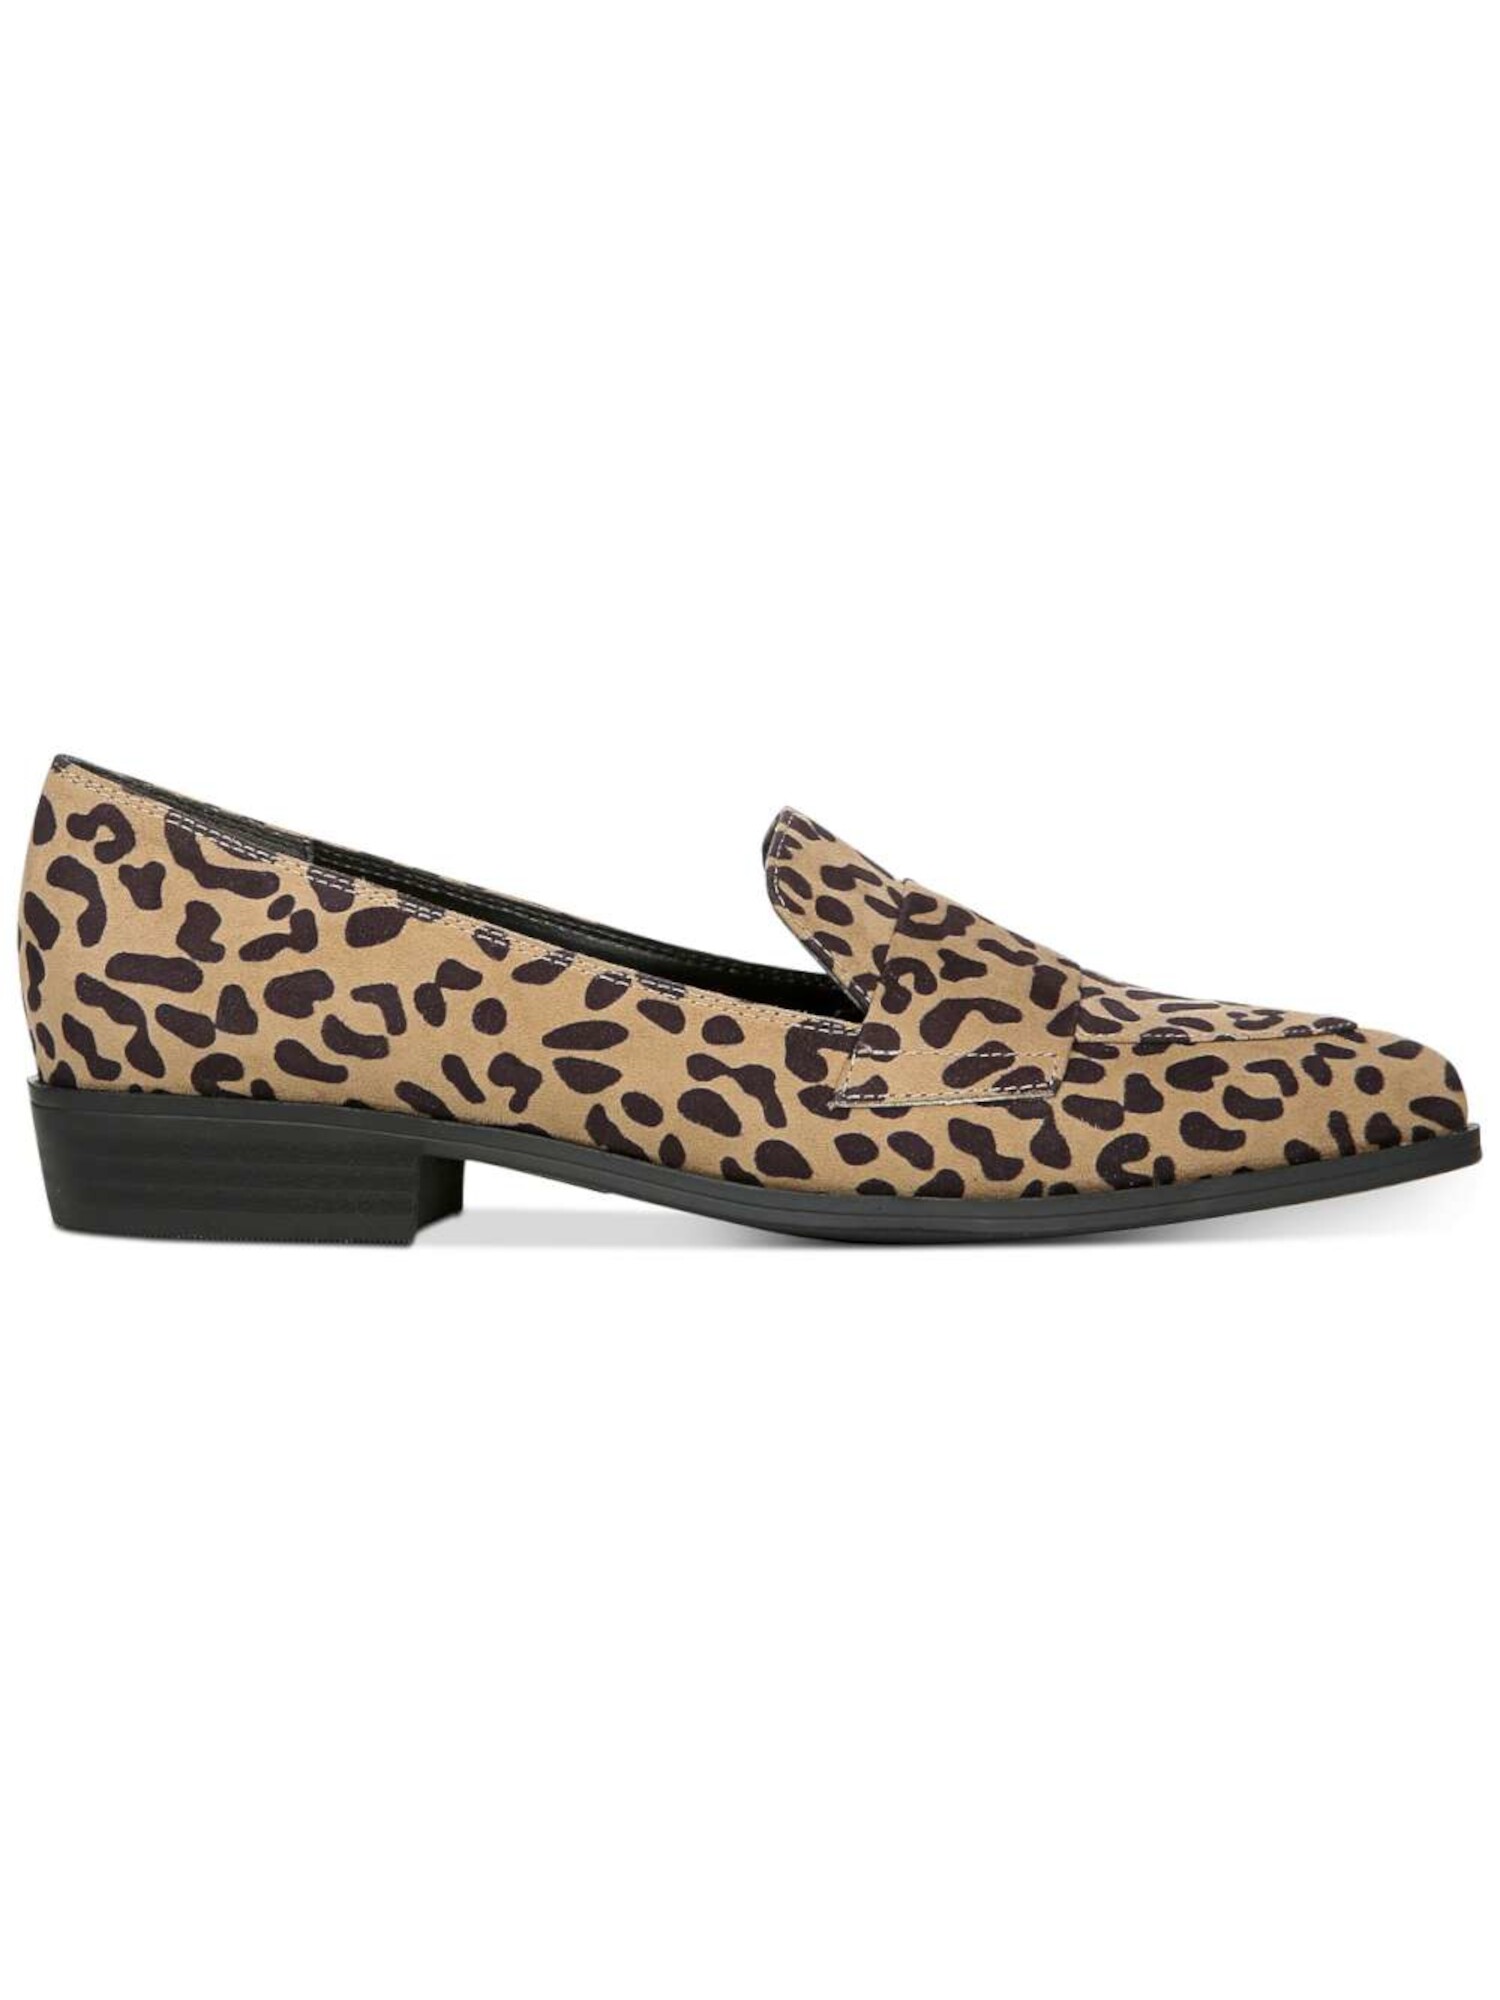 BAR III Womens Brown Animal Print Leopard 1/2 Heel Strap Detail Padded Involve Almond Toe Block Heel Slip On Loafers Shoes 5.5 M